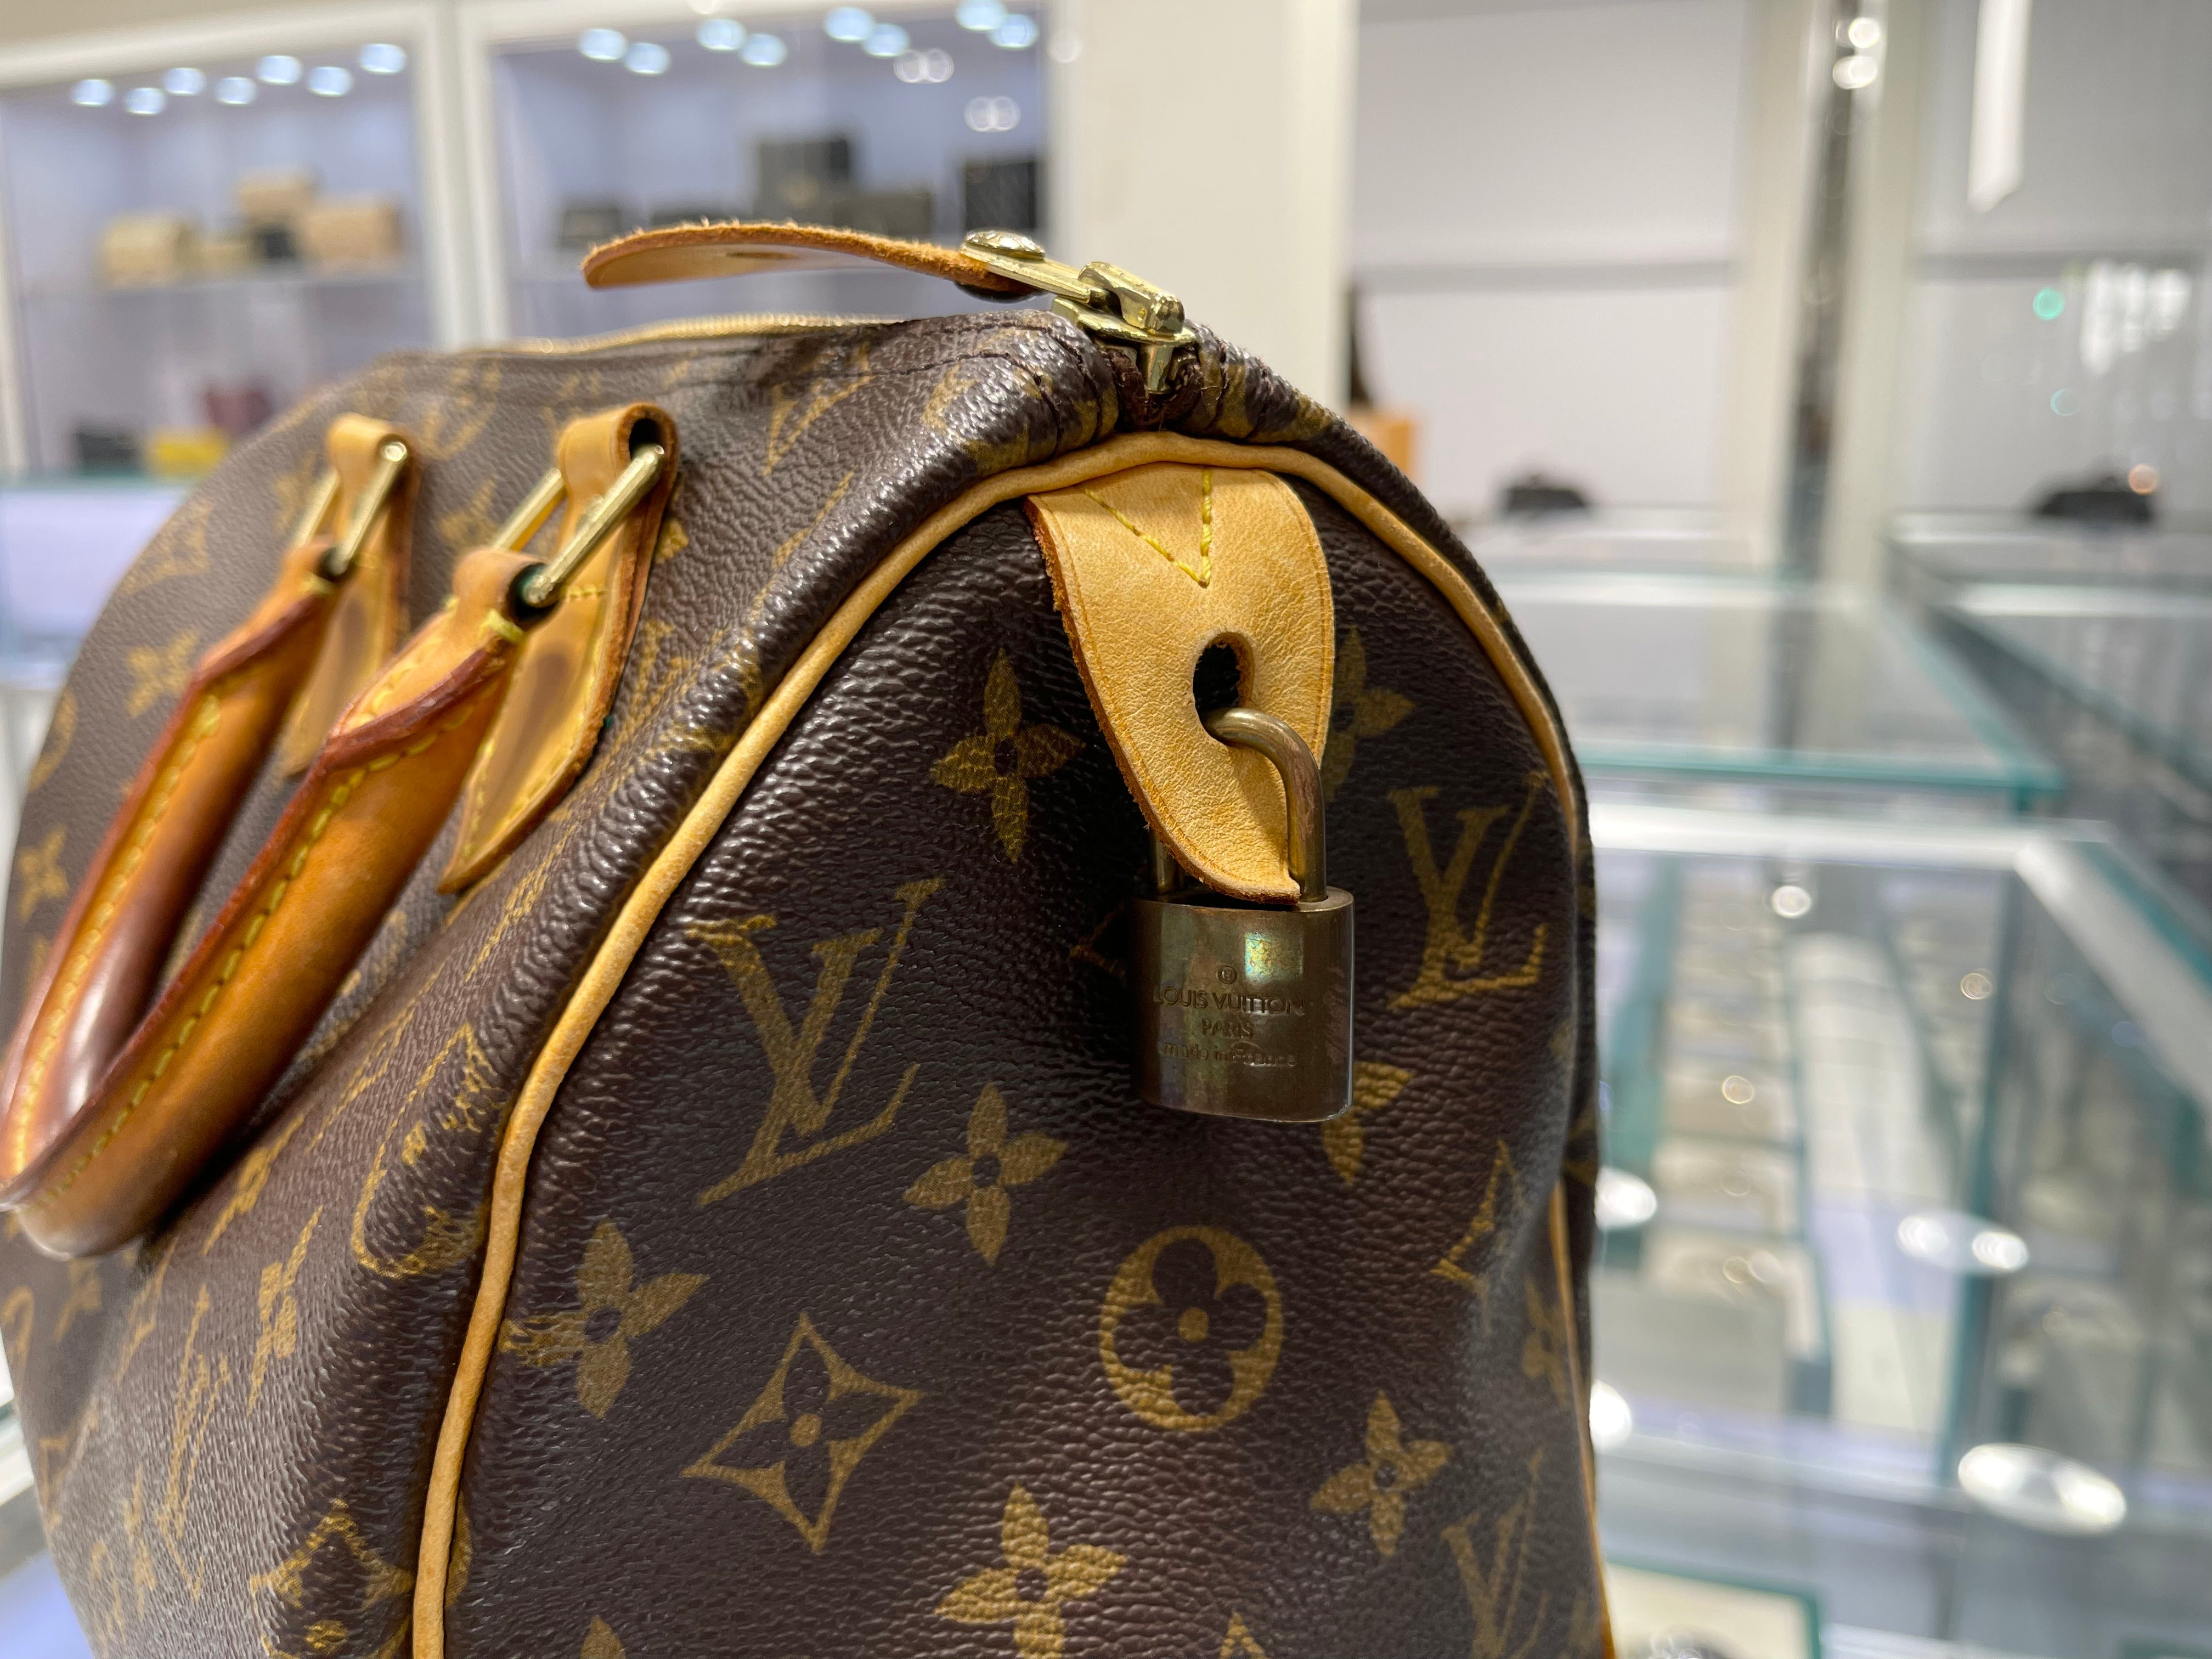 Louis Vuitton Speedy 25 Monogram Bag